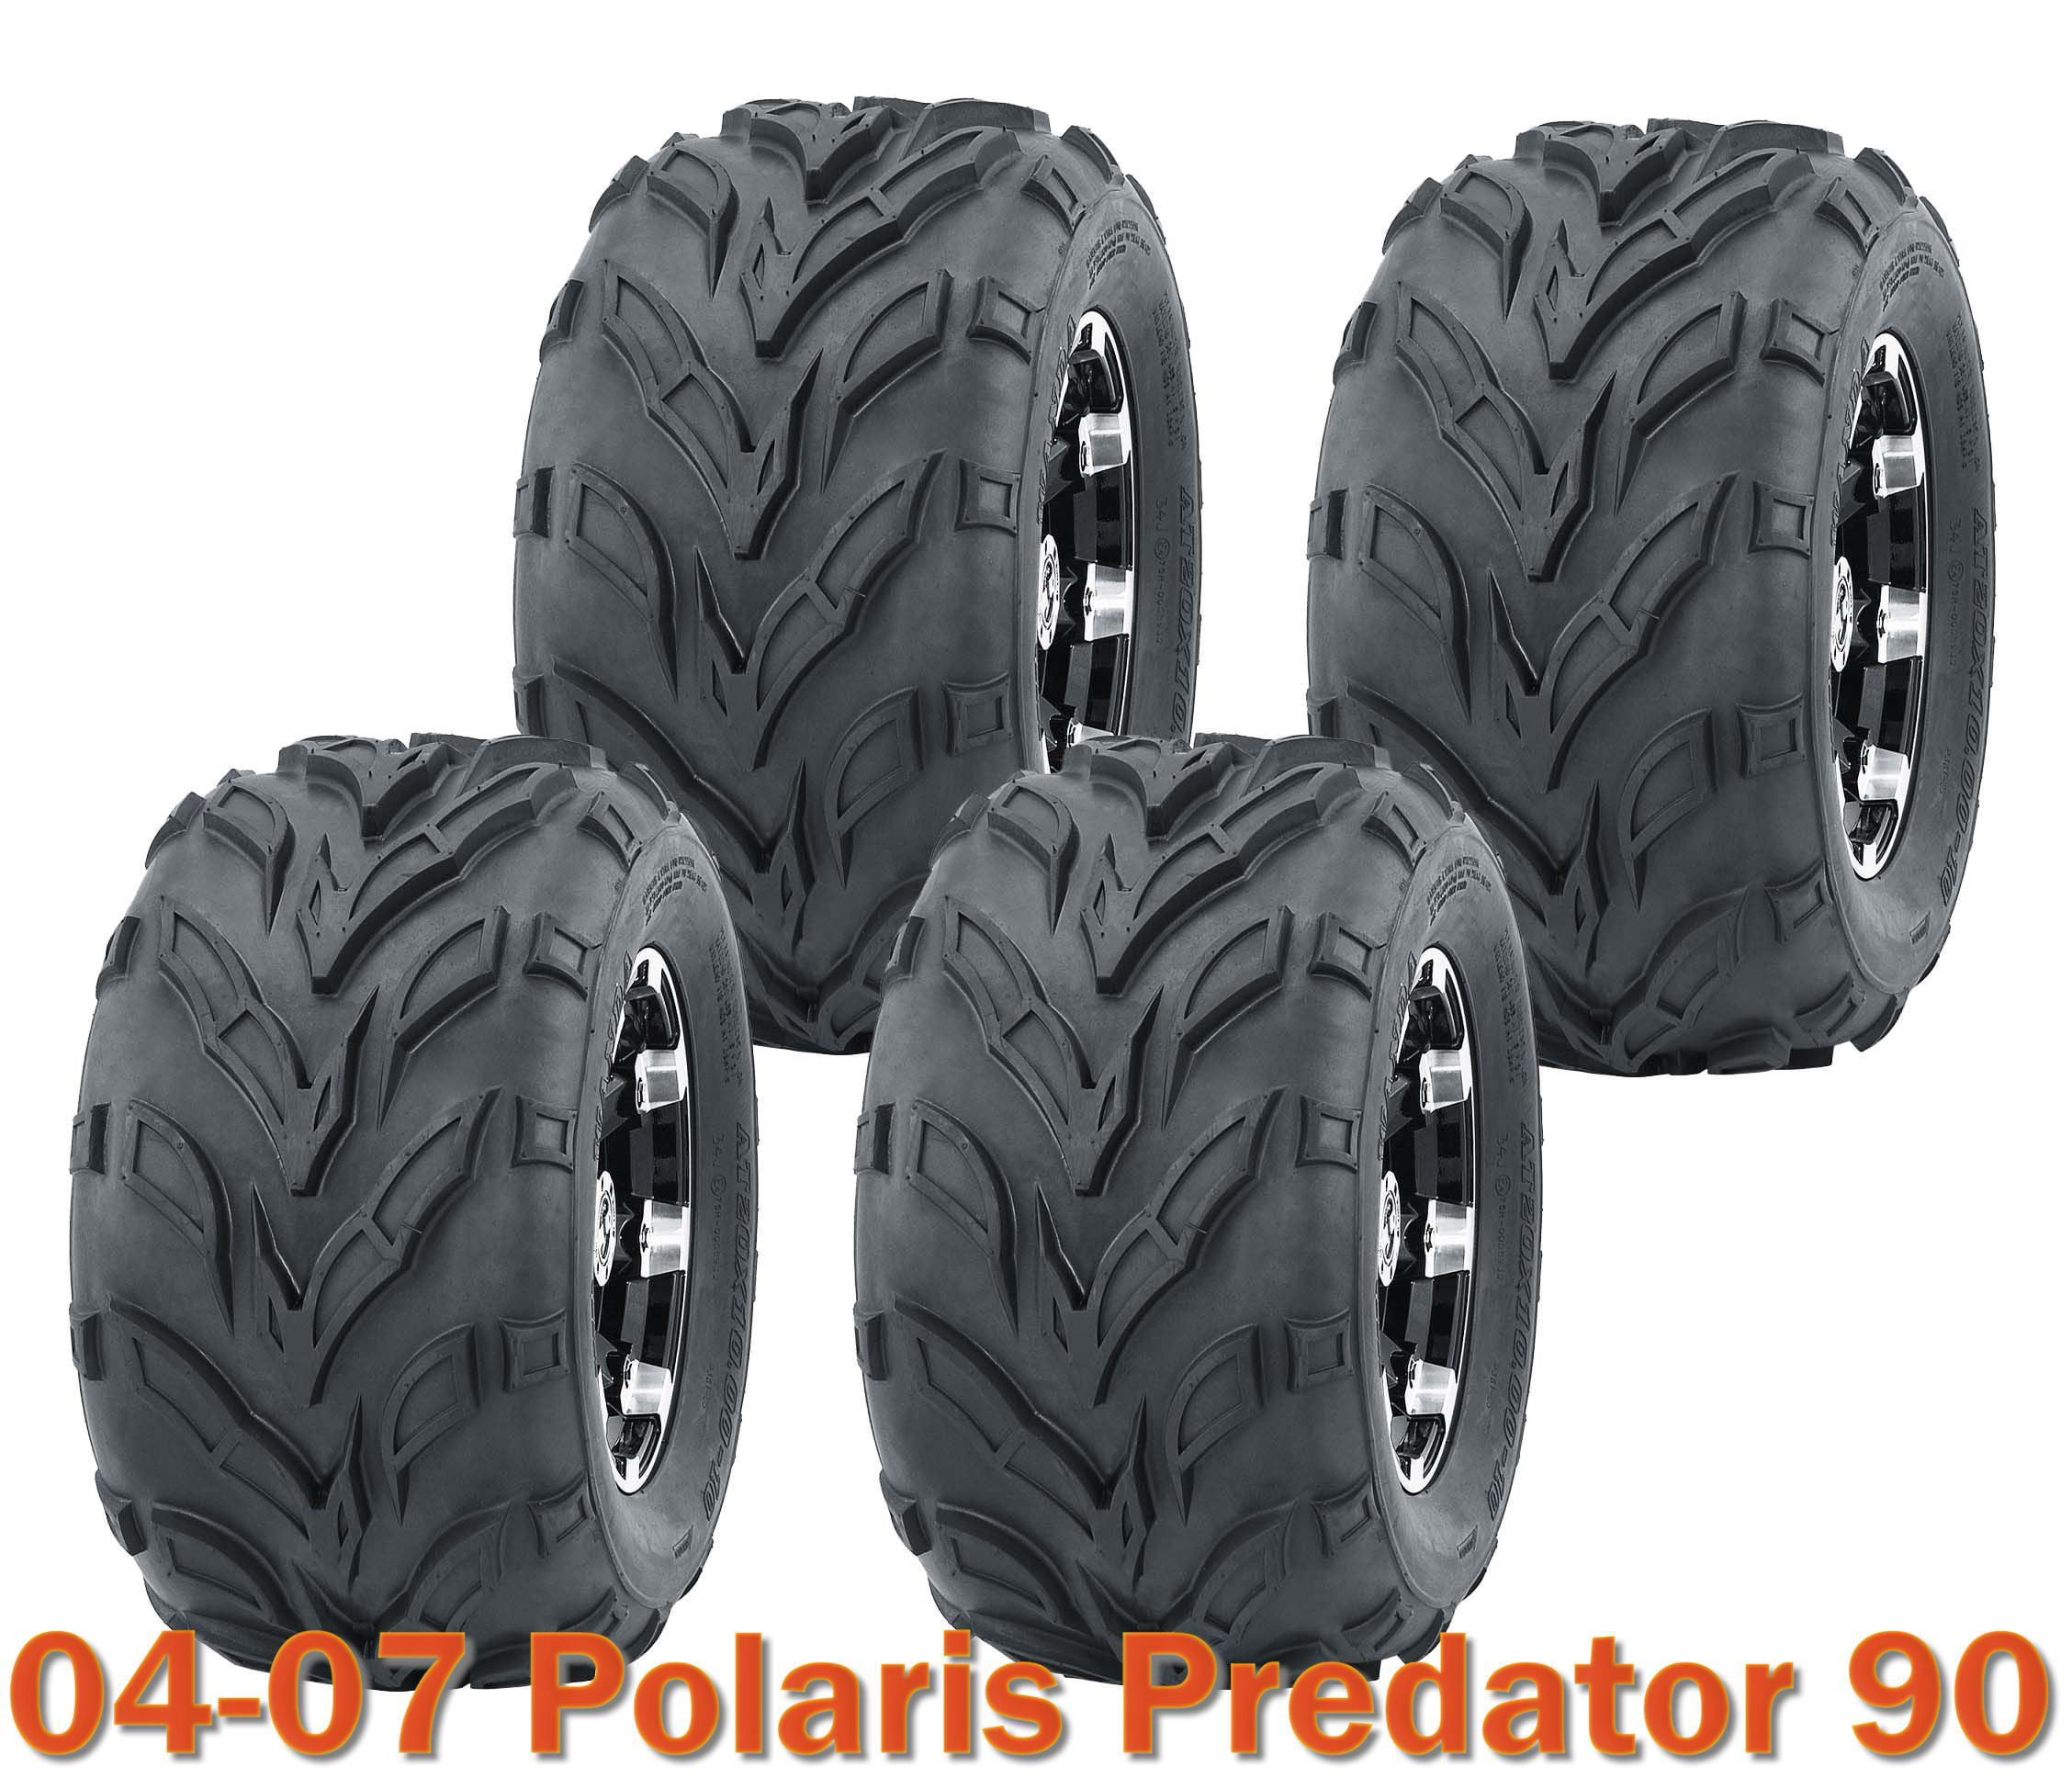 175/80-8 Predator P80 Sportsman SET OF TWO: ATV Tubeless Tire 19x7-8 Scrambler fits POLARIS 90 Outlaw 